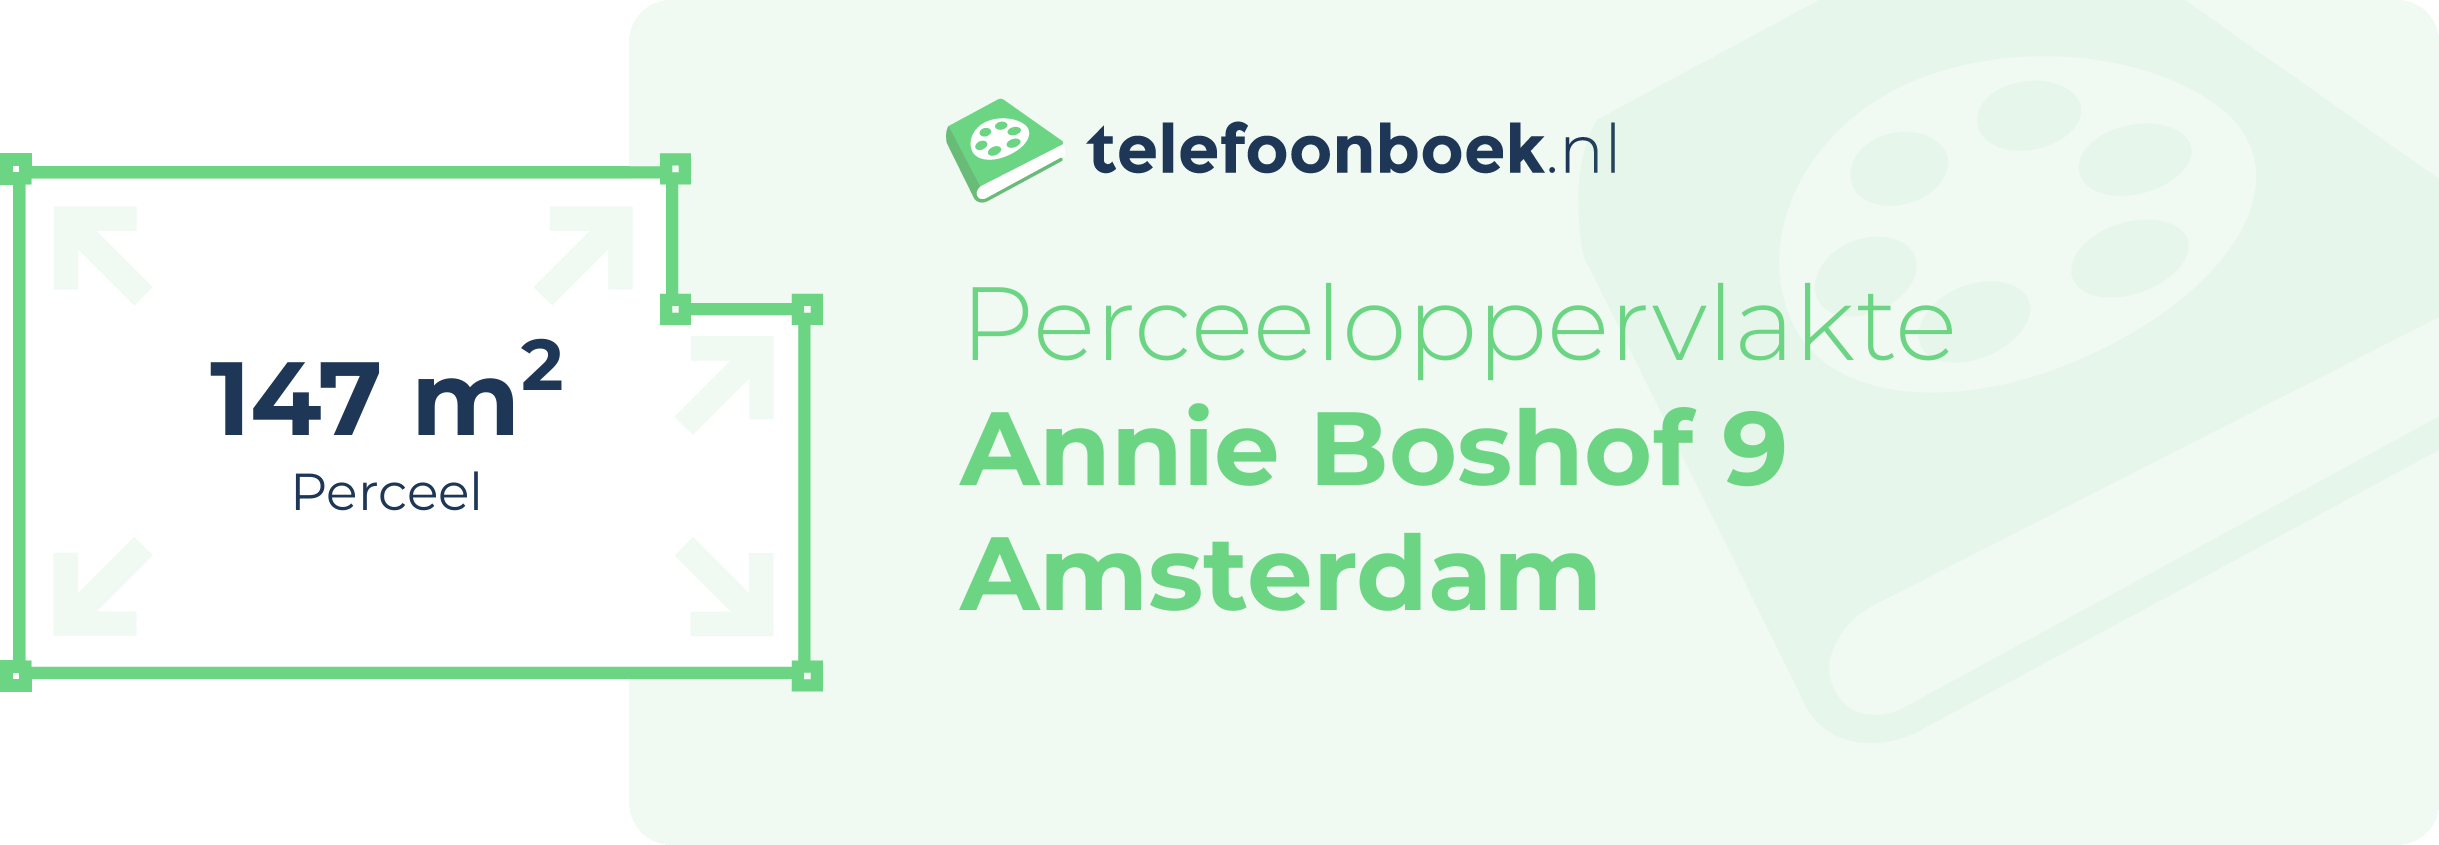 Perceeloppervlakte Annie Boshof 9 Amsterdam